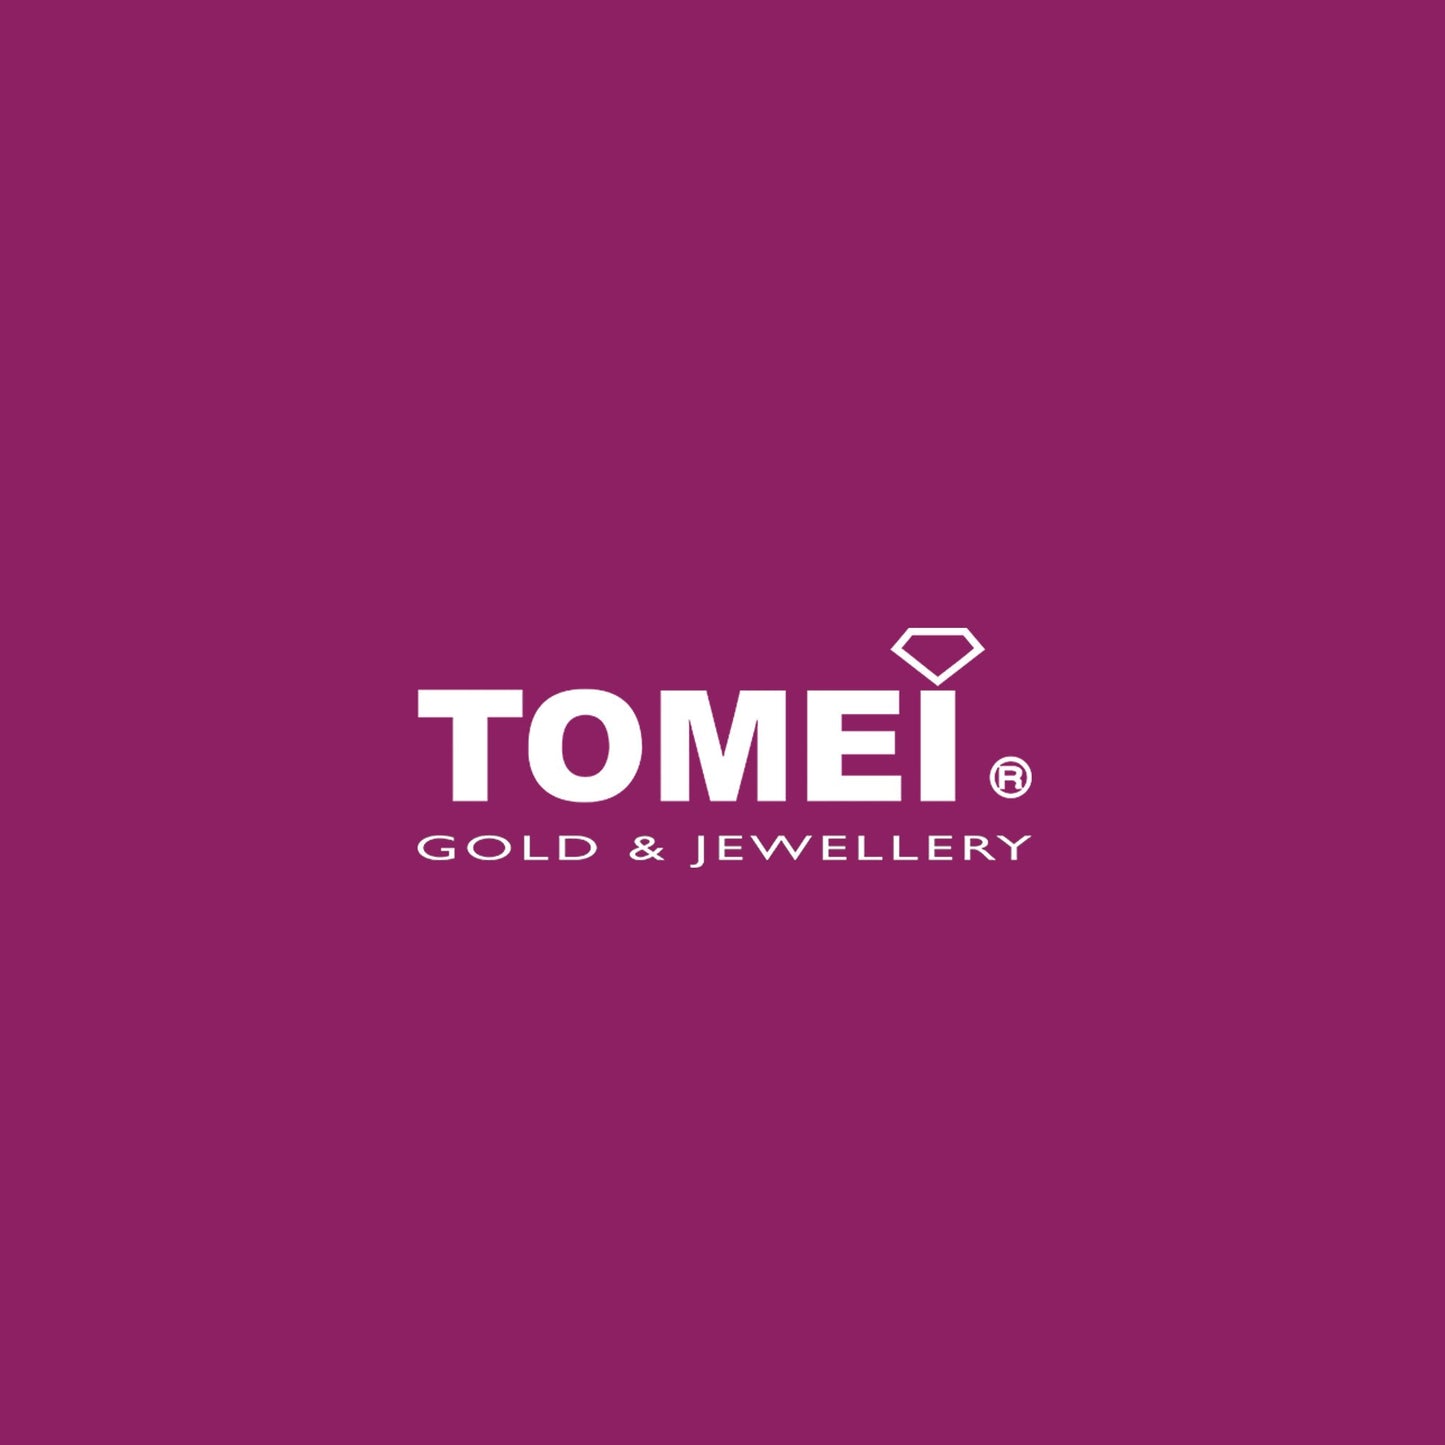 TOMEI Koleksi Arisha Long Necklace, Yellow Gold 916